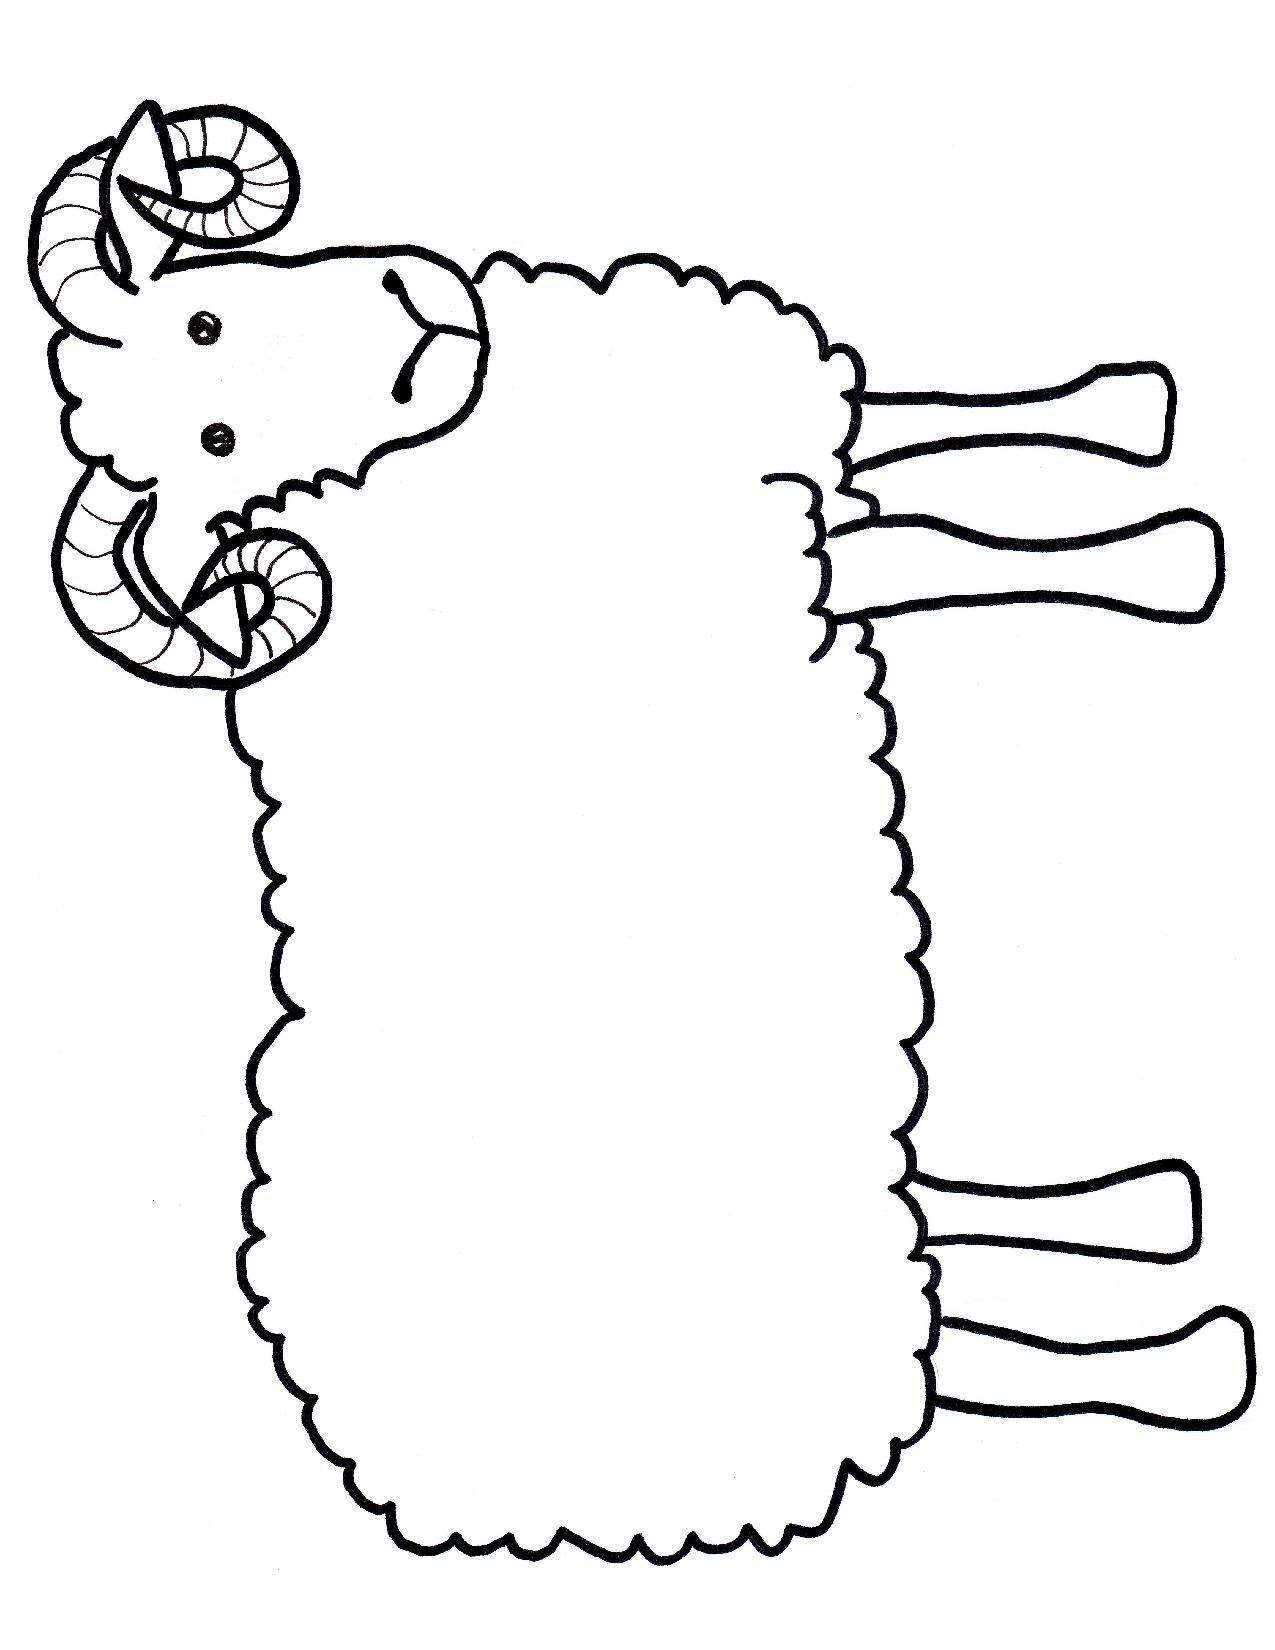 Sheep Template For Children - ClipArt Best